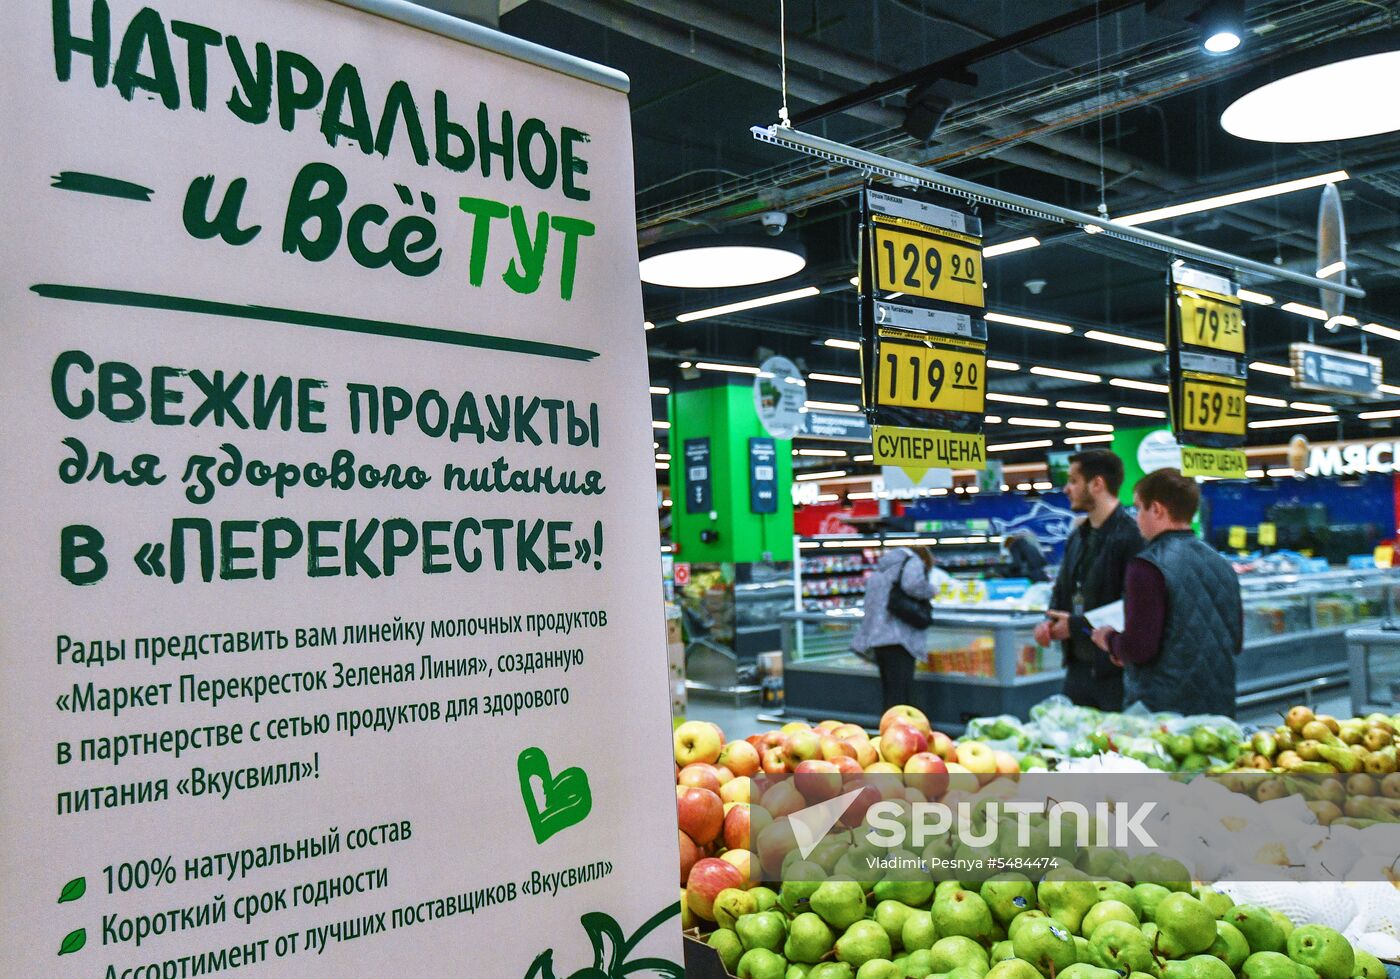 Perekryostok supermarket in Moscow